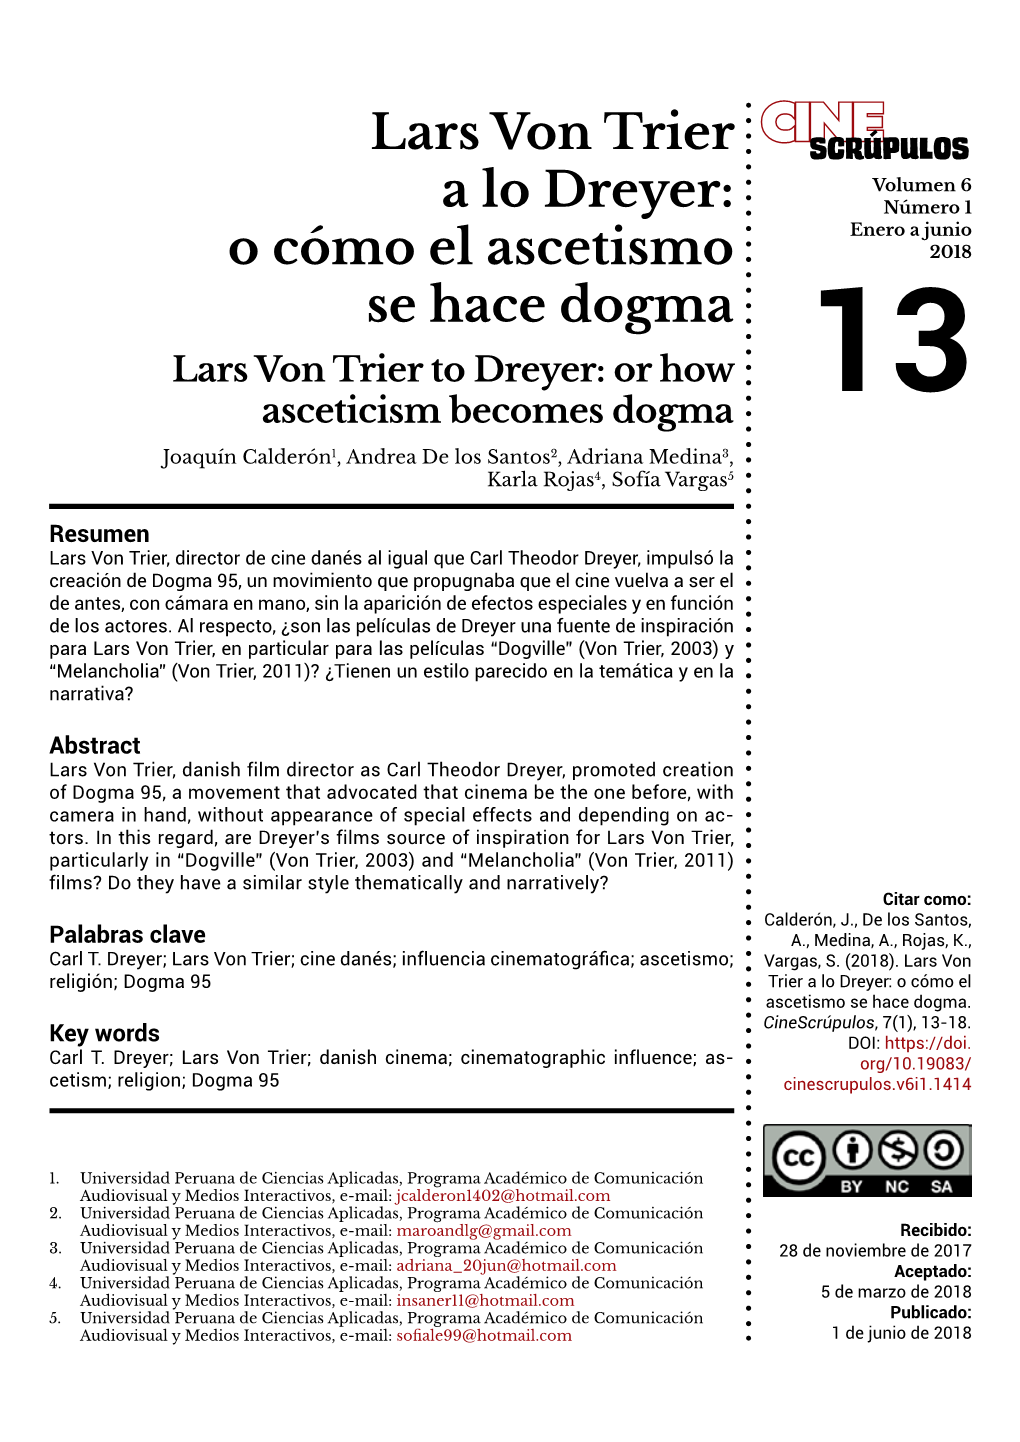 Lars Von Trier a Lo Dreyer: O Lars Von Trier to Dreyer: Or How Cómo El Ascetismo Se Hace Dogma Asceticism Becomes Dogma